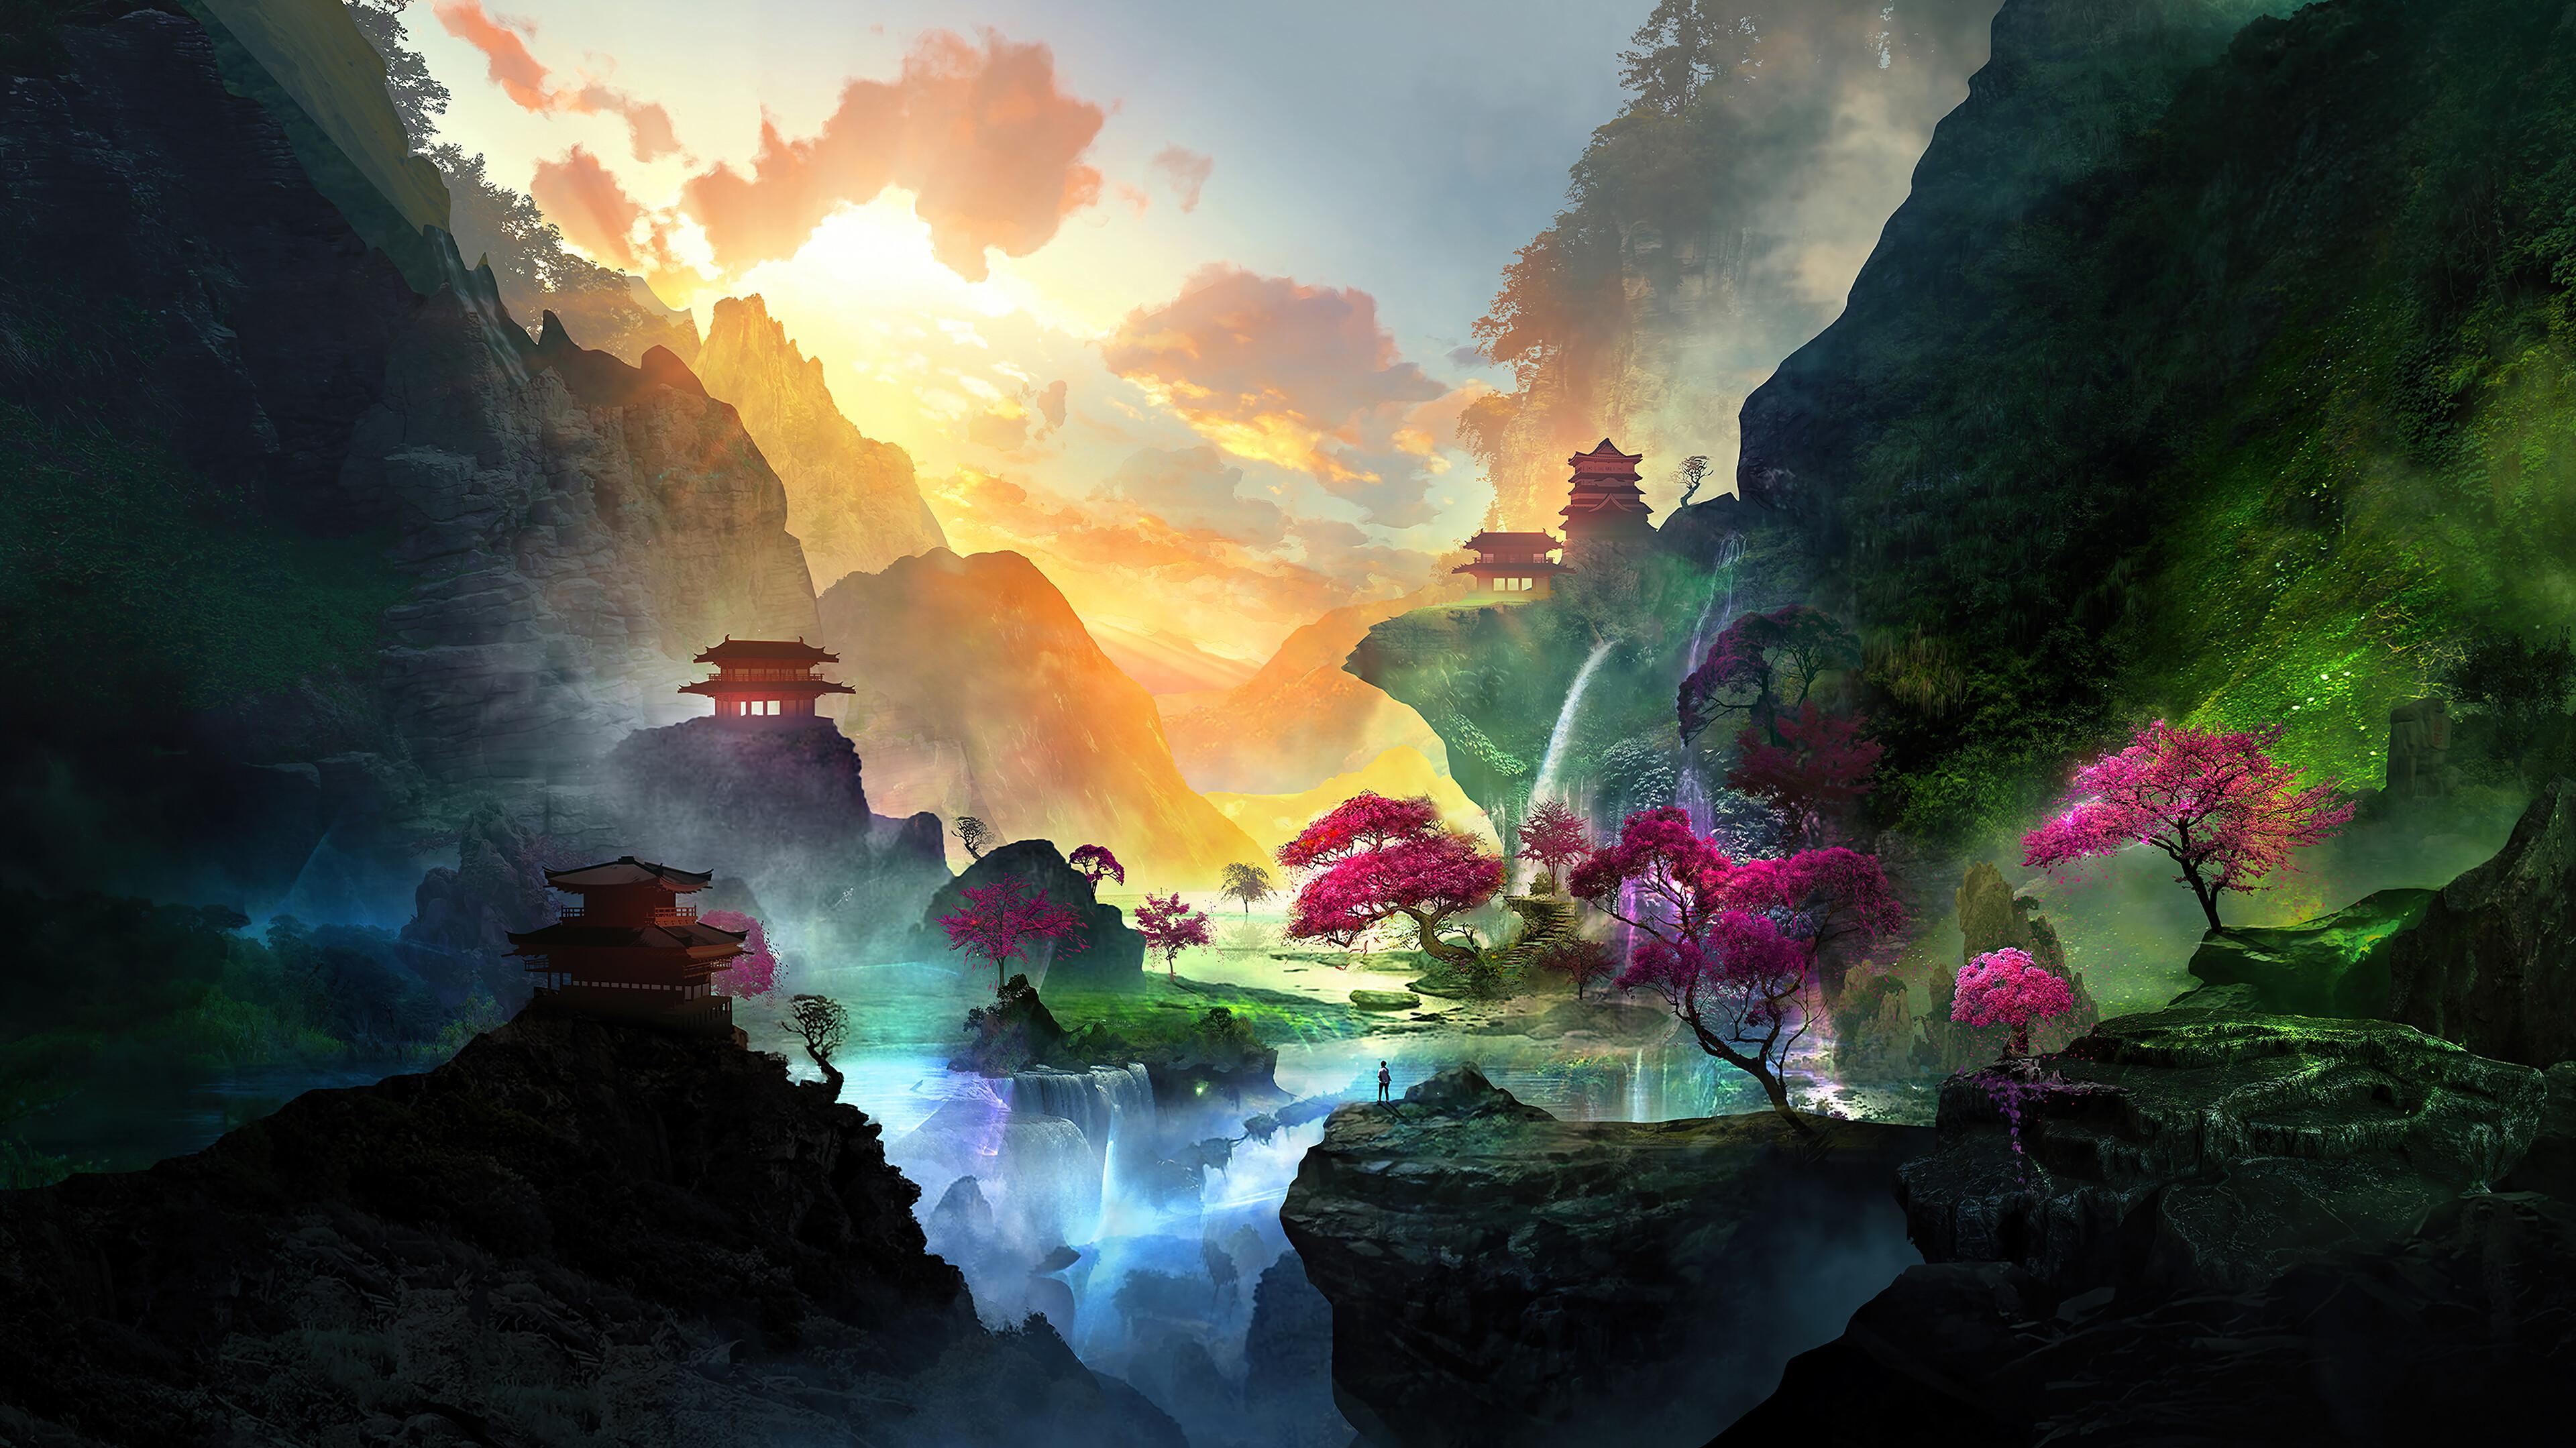 Fantasy Forest Mountain Digital Art HD 4k Wallpaper